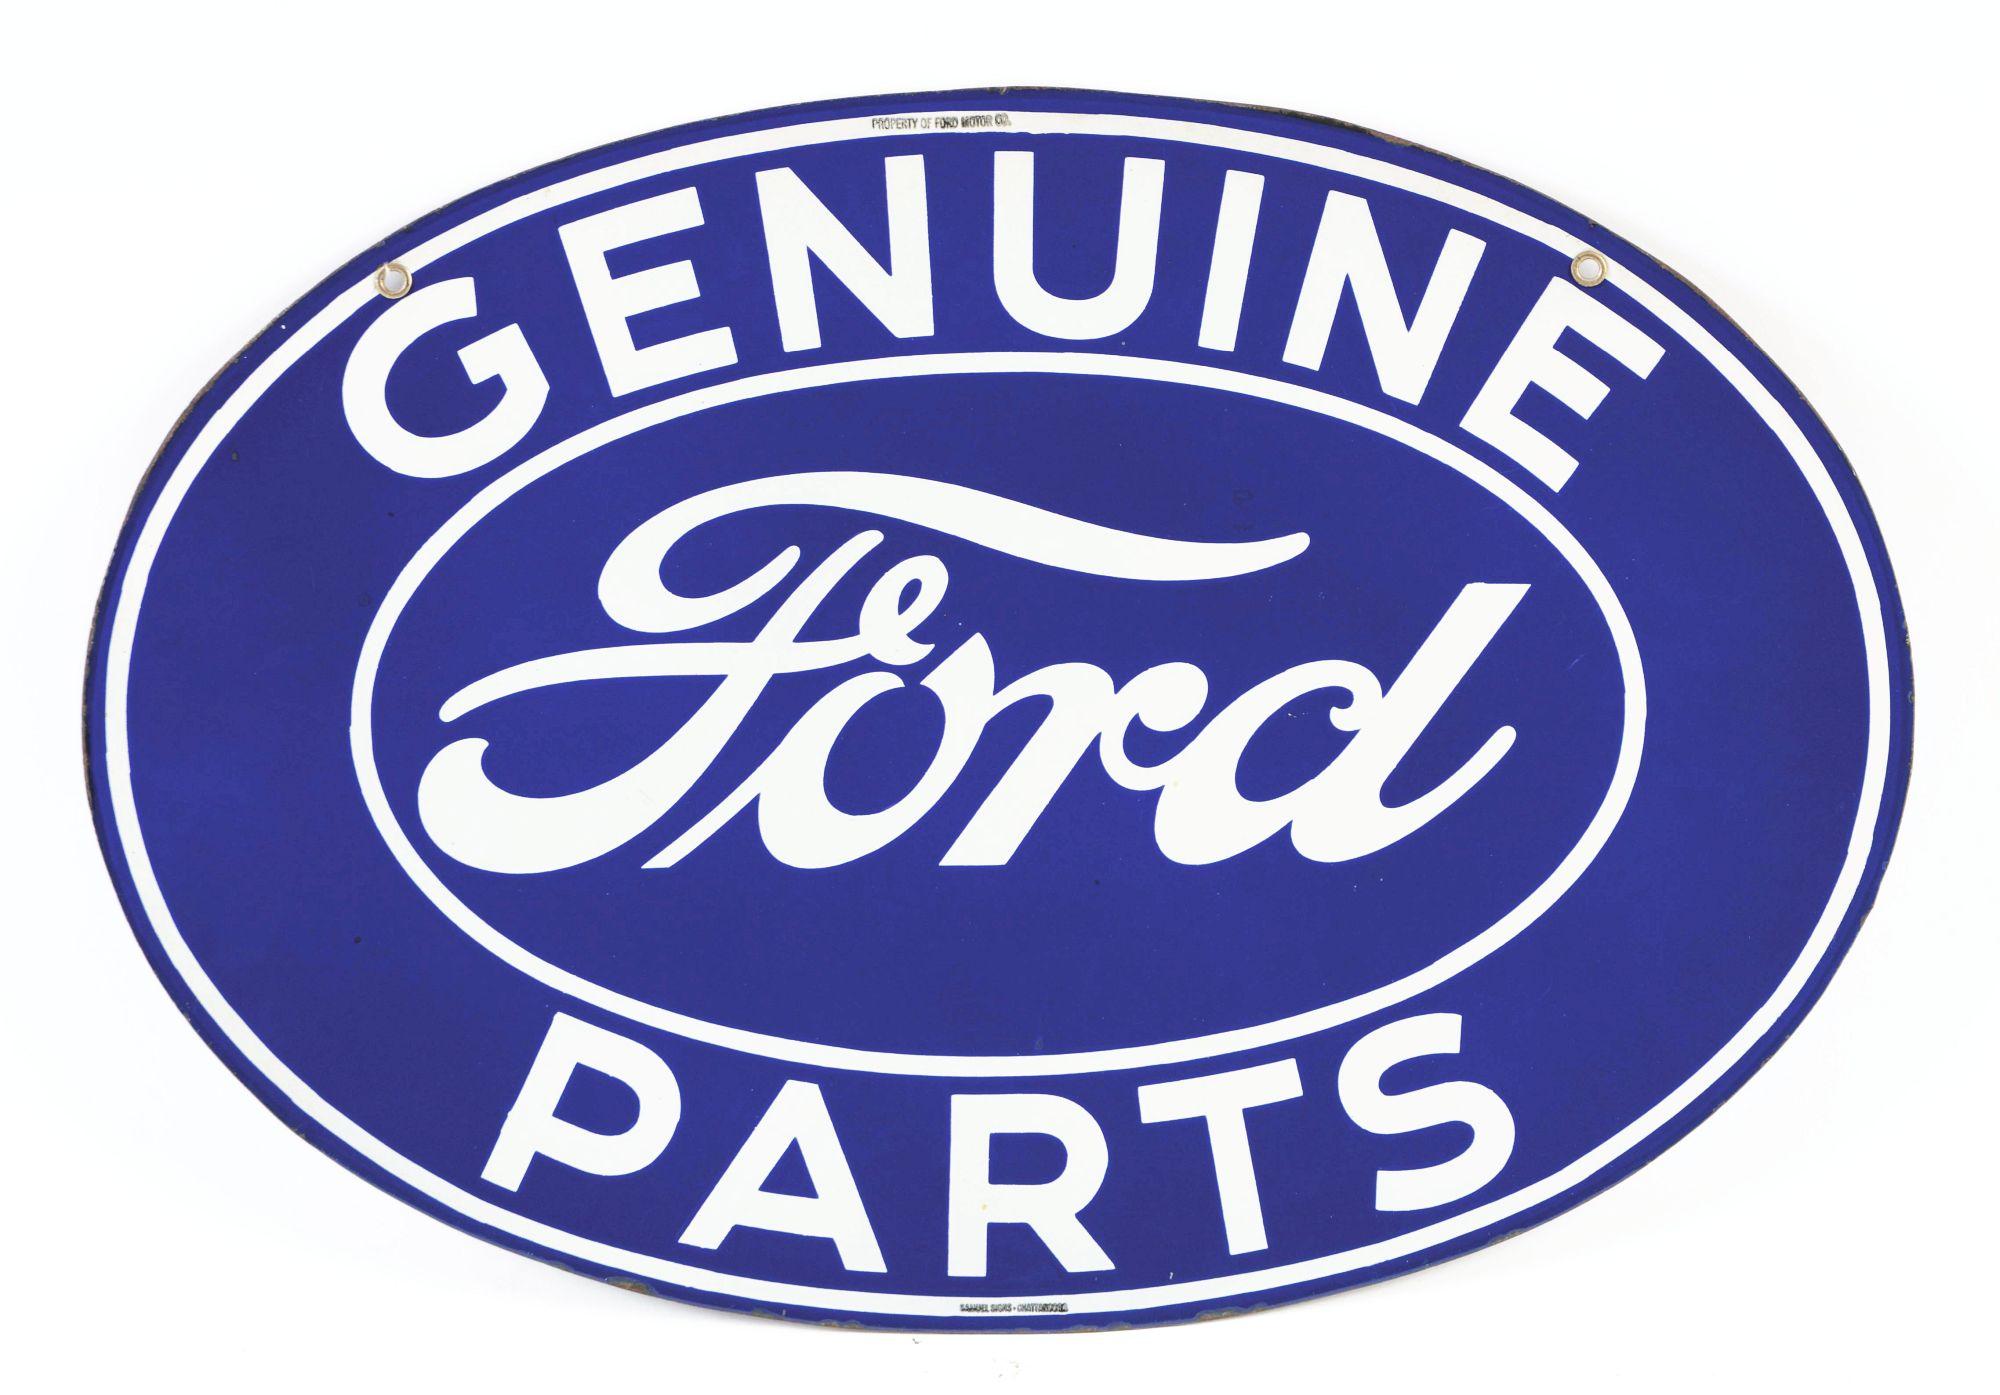 Ford Genuine Parts Porcelain Oval Sign.